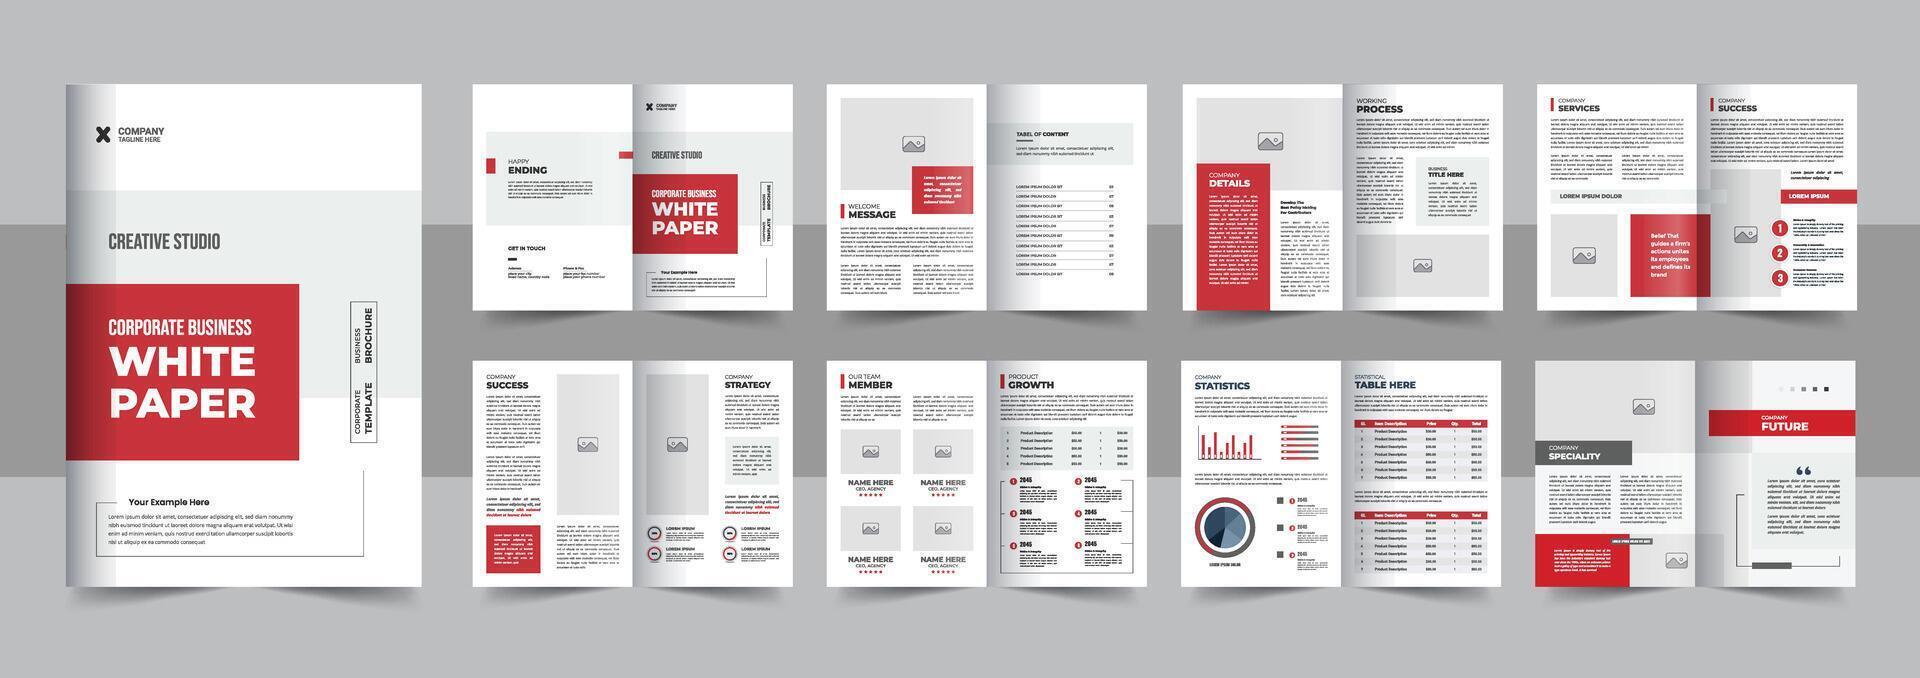 creativo corporativo blanco papel, blanco papel diseño diseño, empresa folleto diseño modelo vector